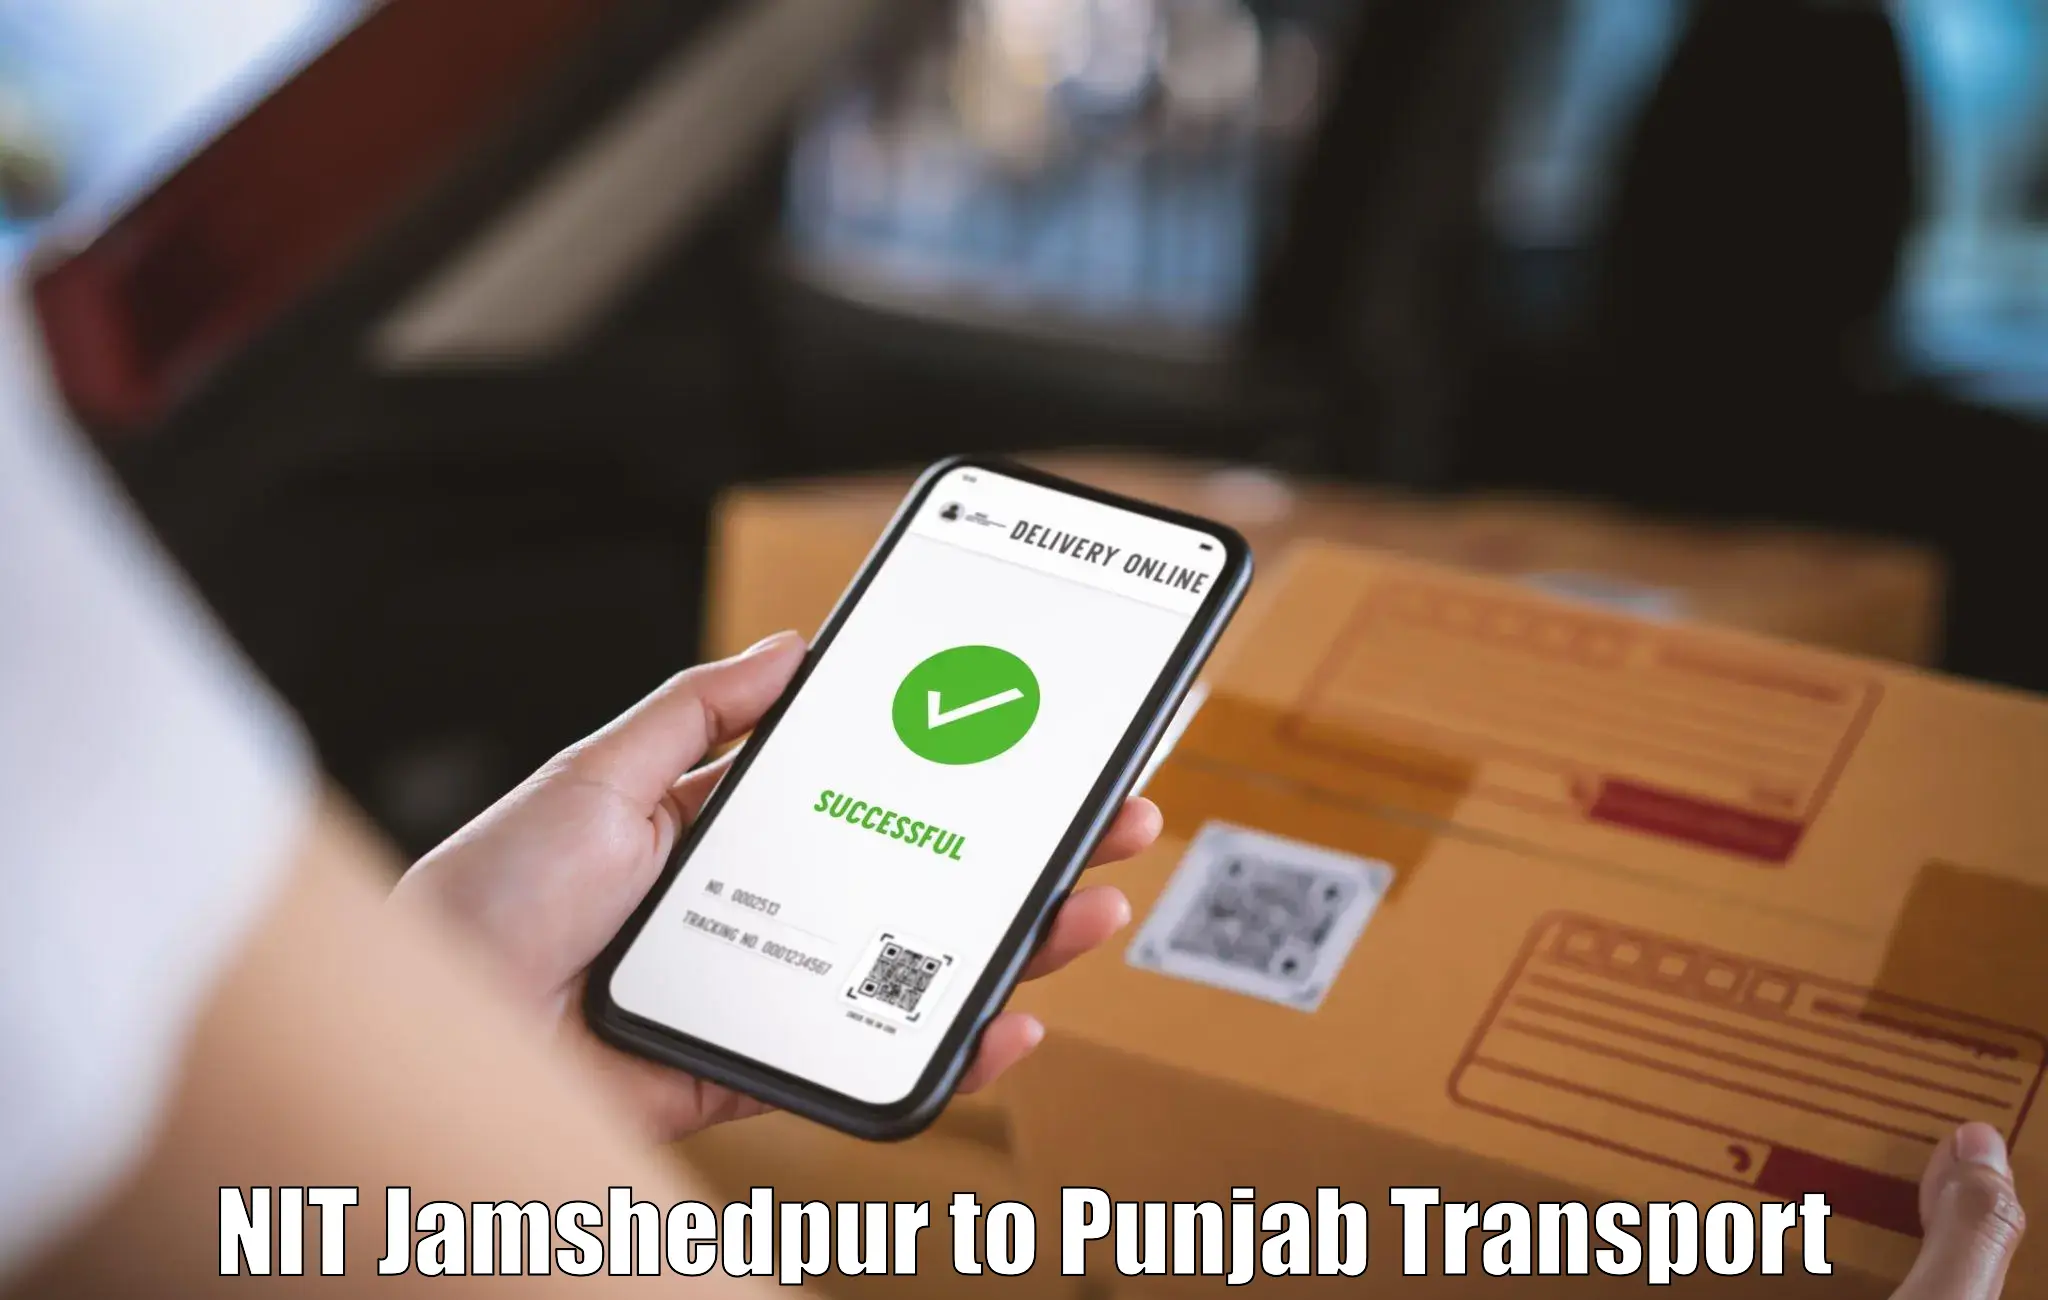 Package delivery services NIT Jamshedpur to Sangrur